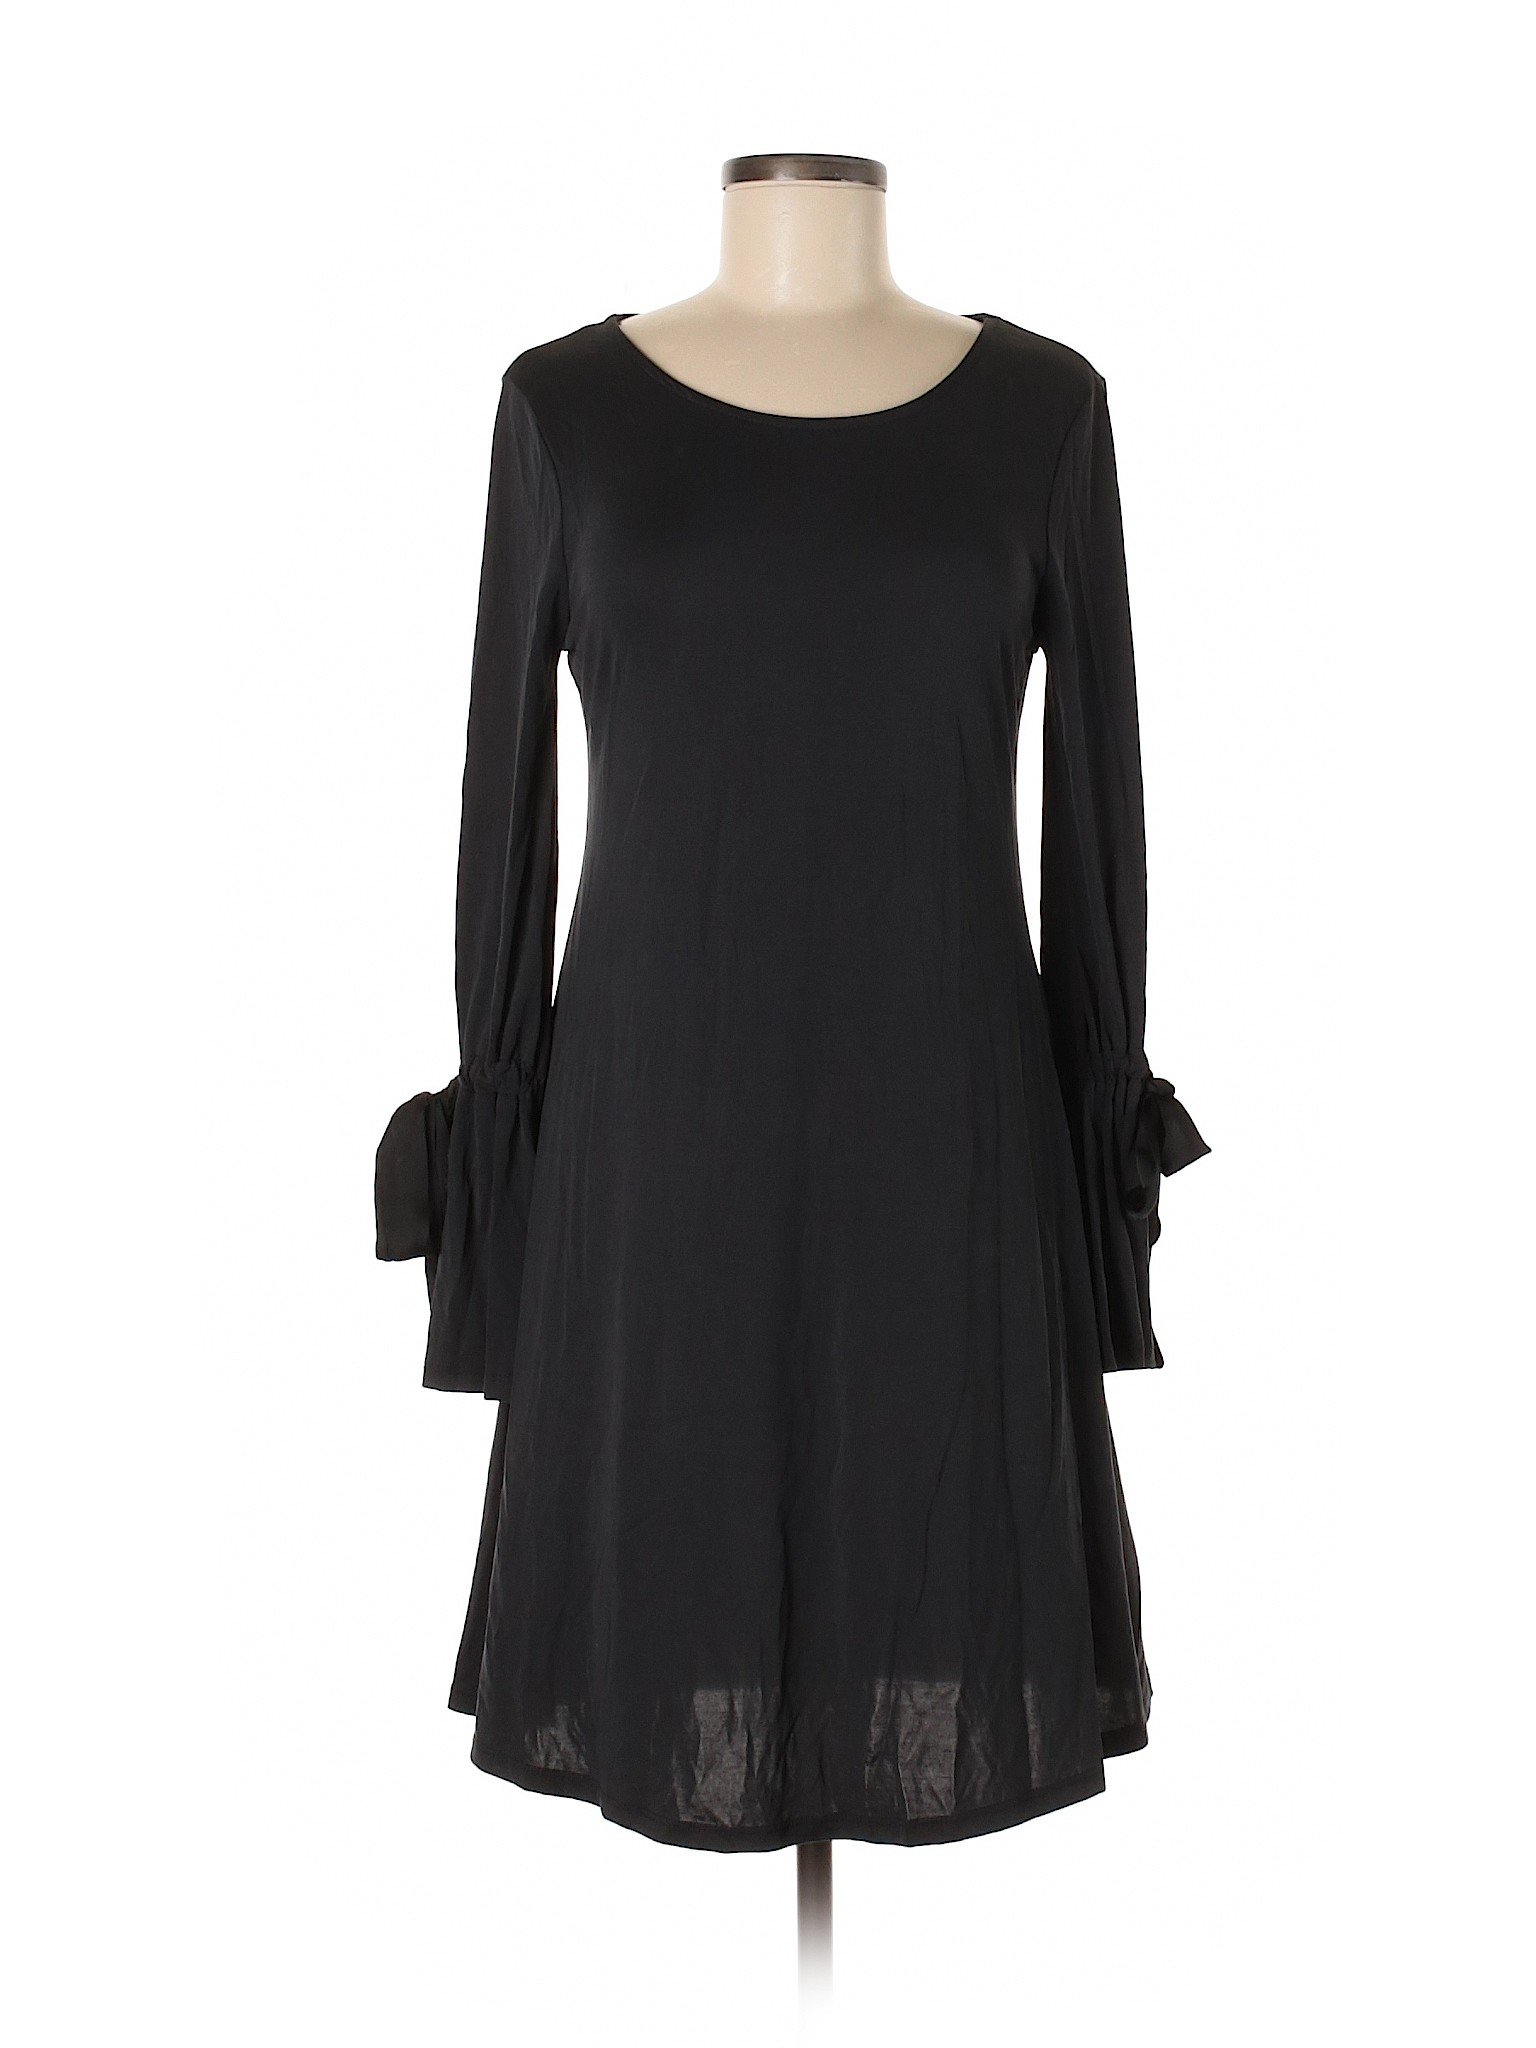 NWT Cupio Women Black Casual Dress M | eBay